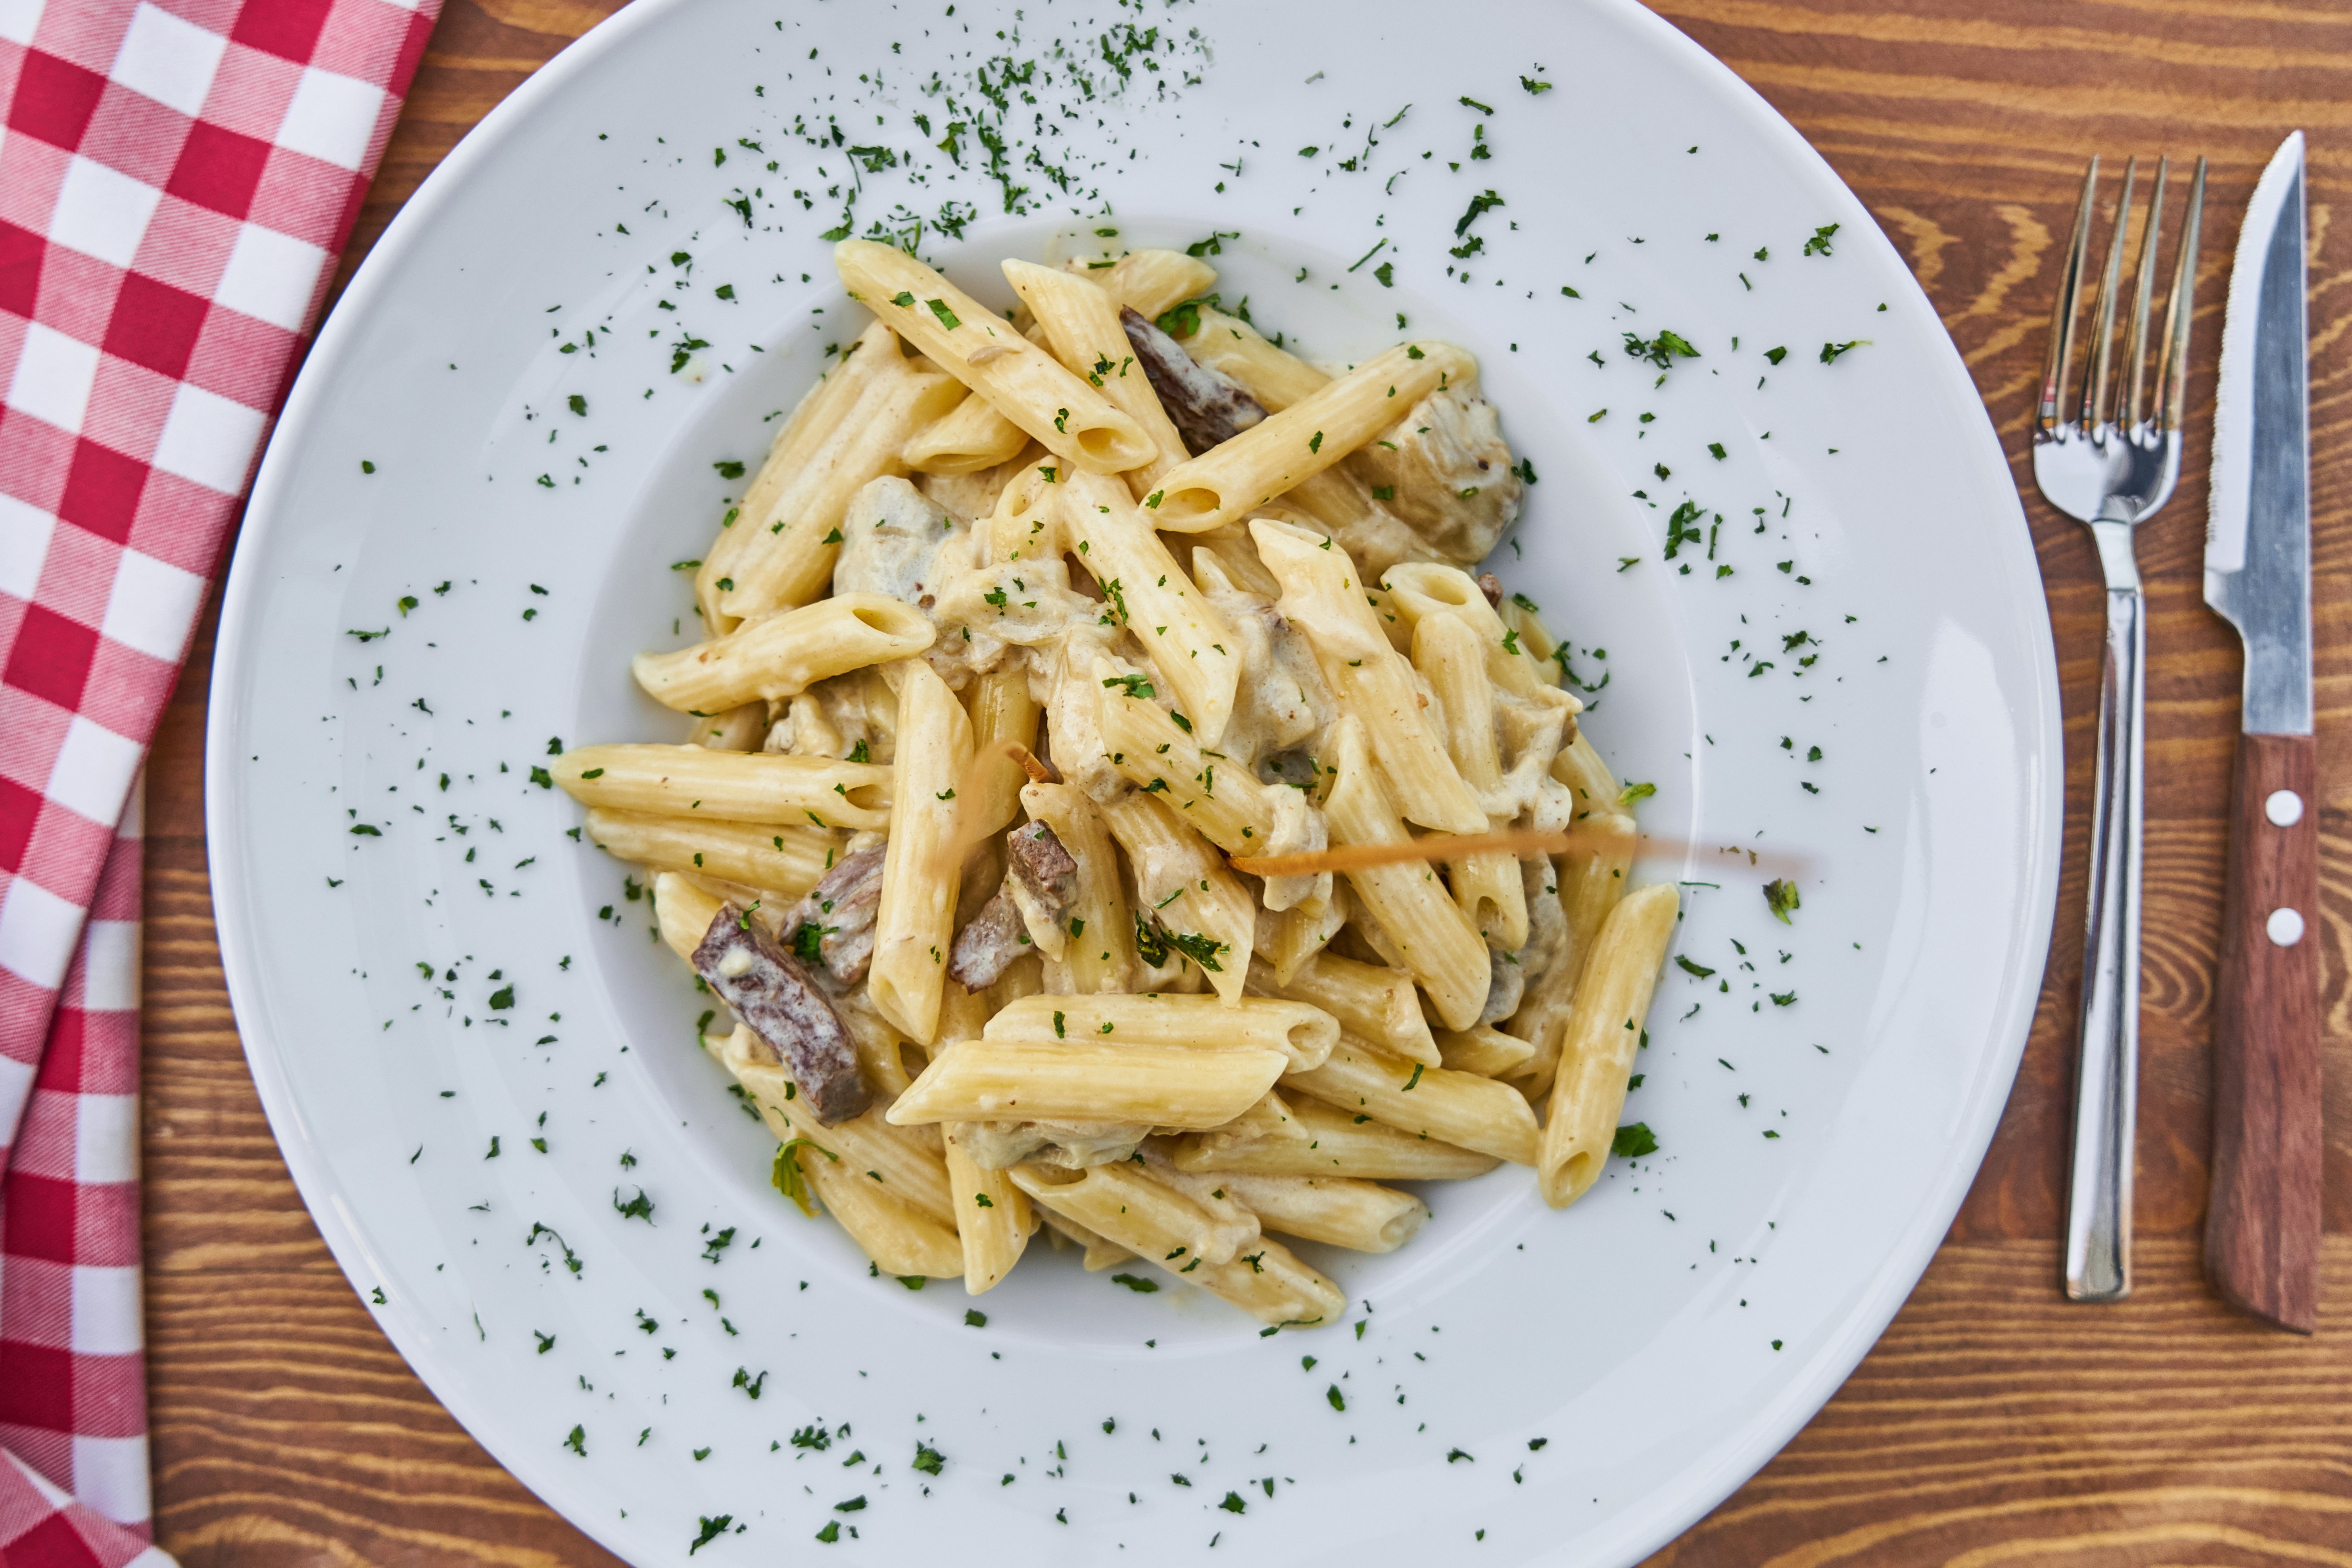 Vote 4 The Best 2020: Italian restaurants in Metro Detroit